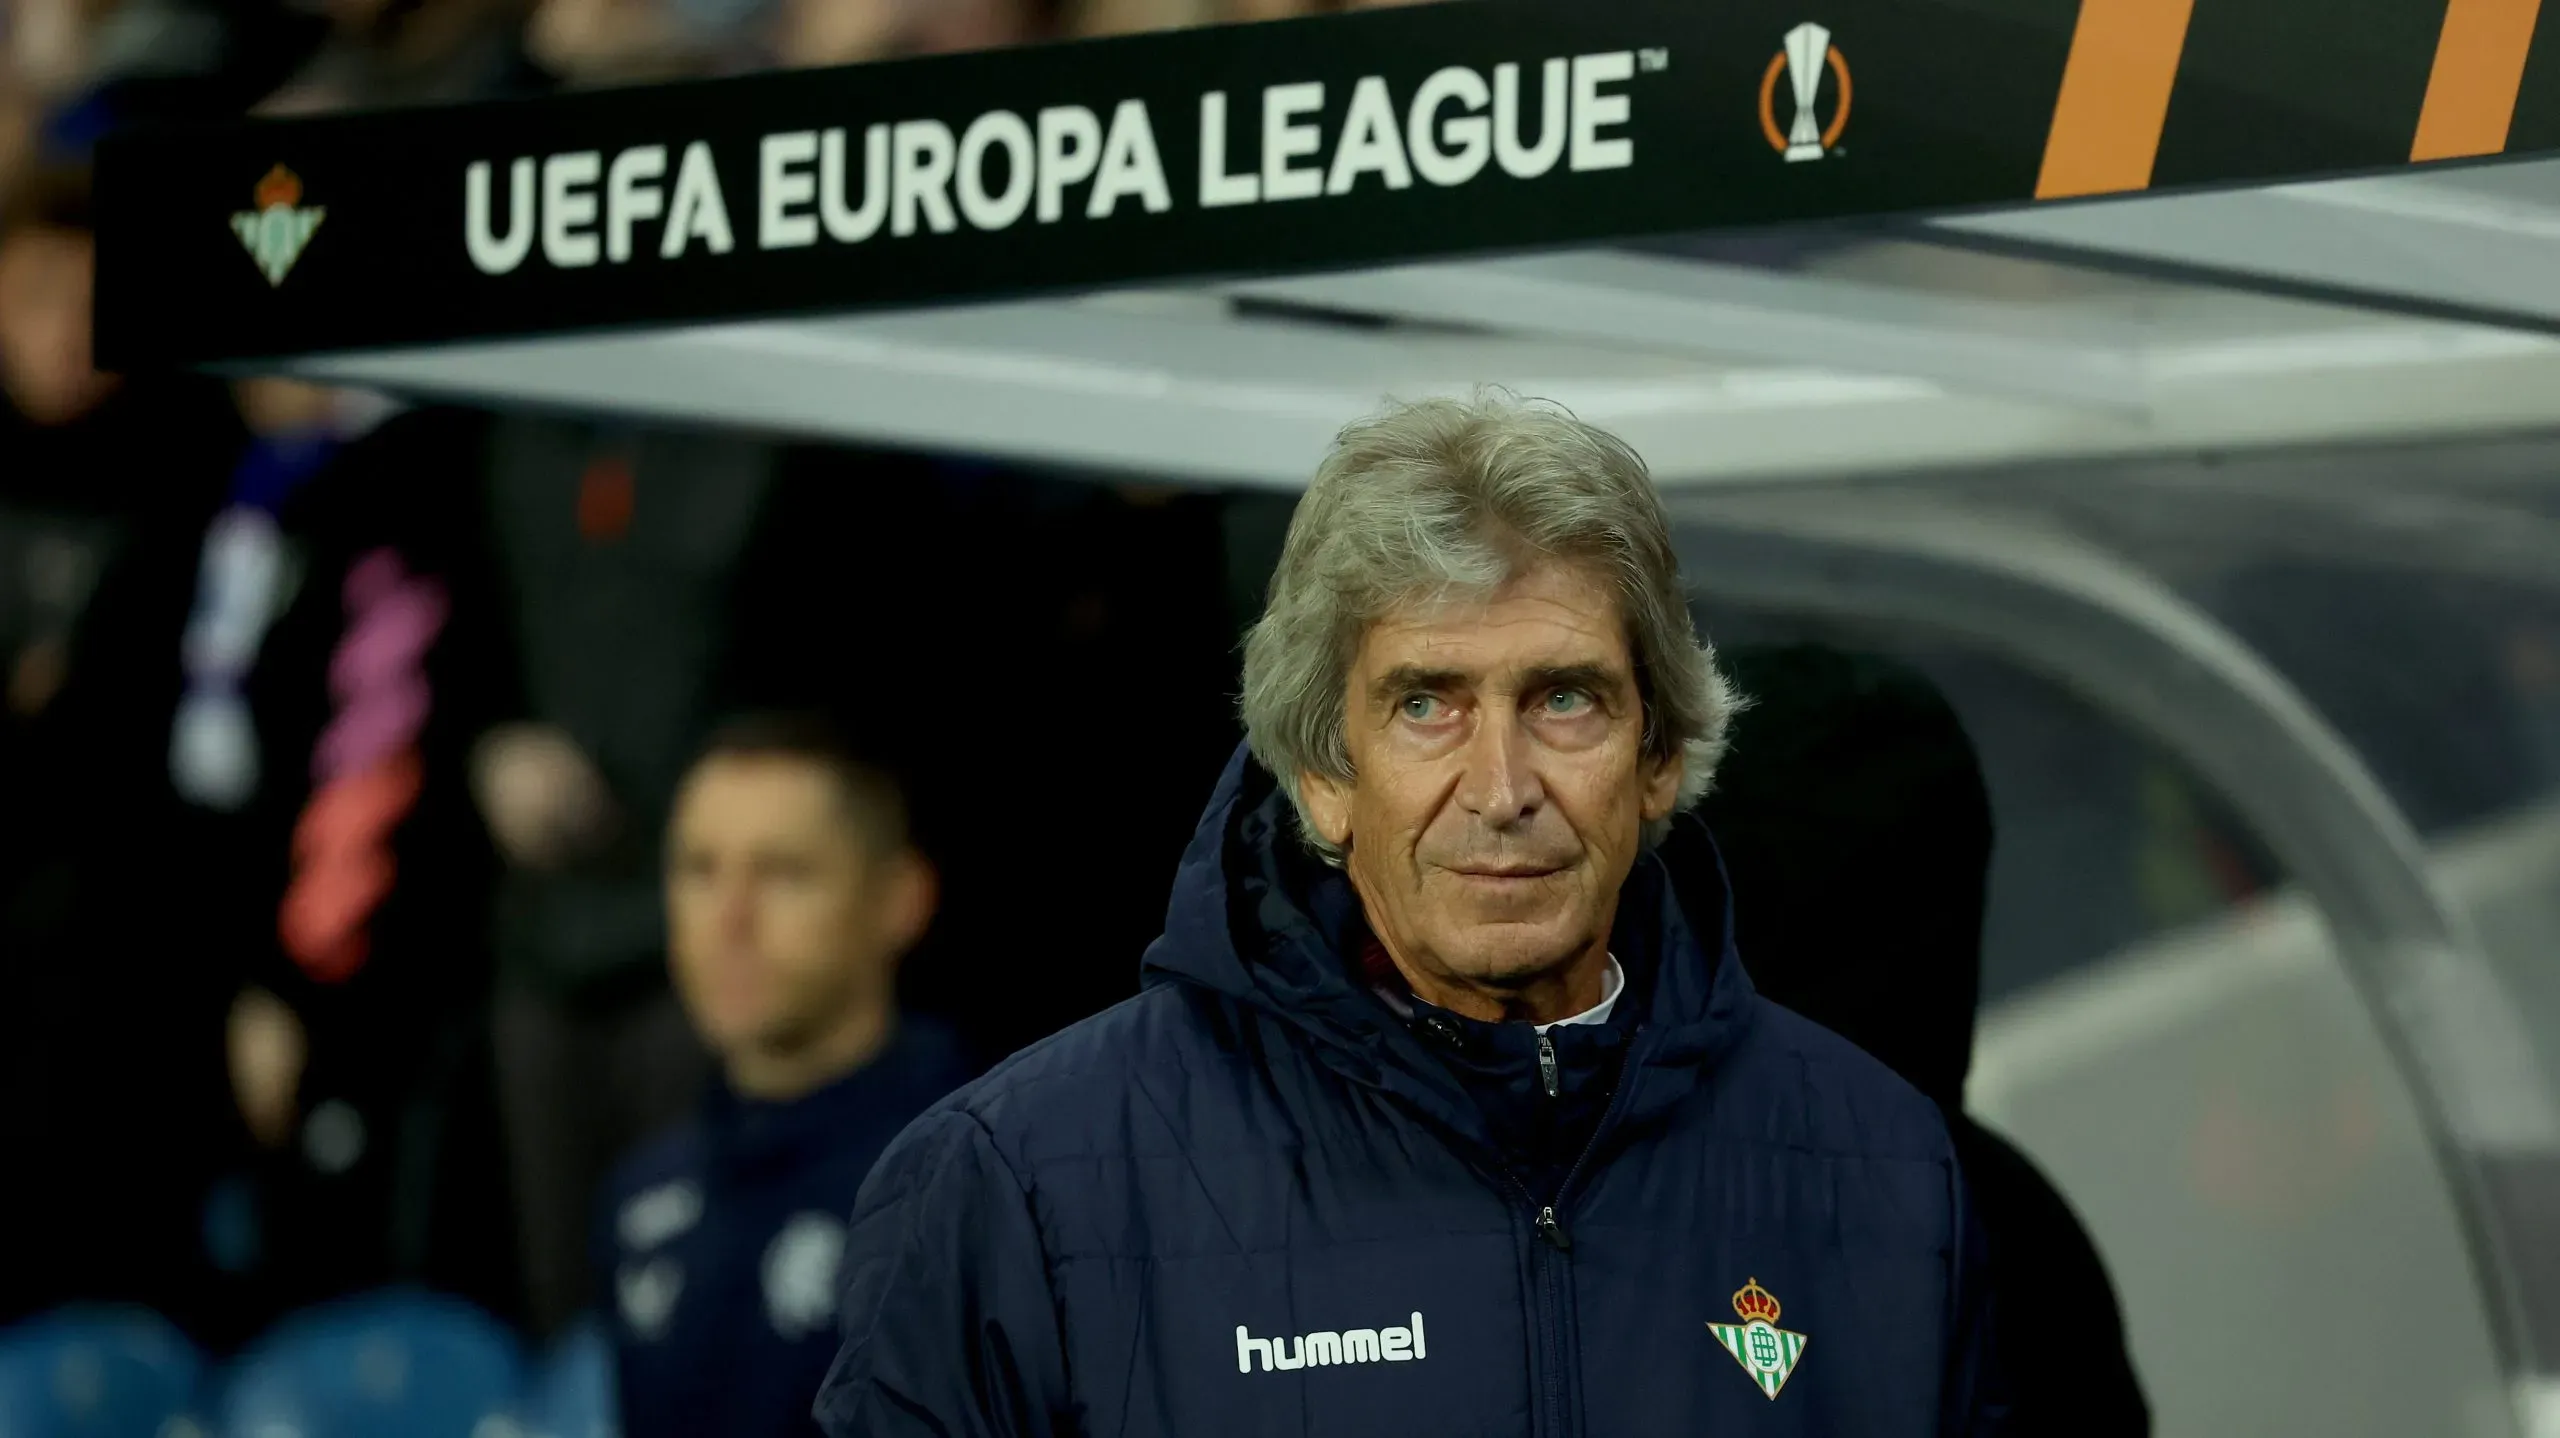 Pellegrini comandando al Betis en Europa League (Getty Images)